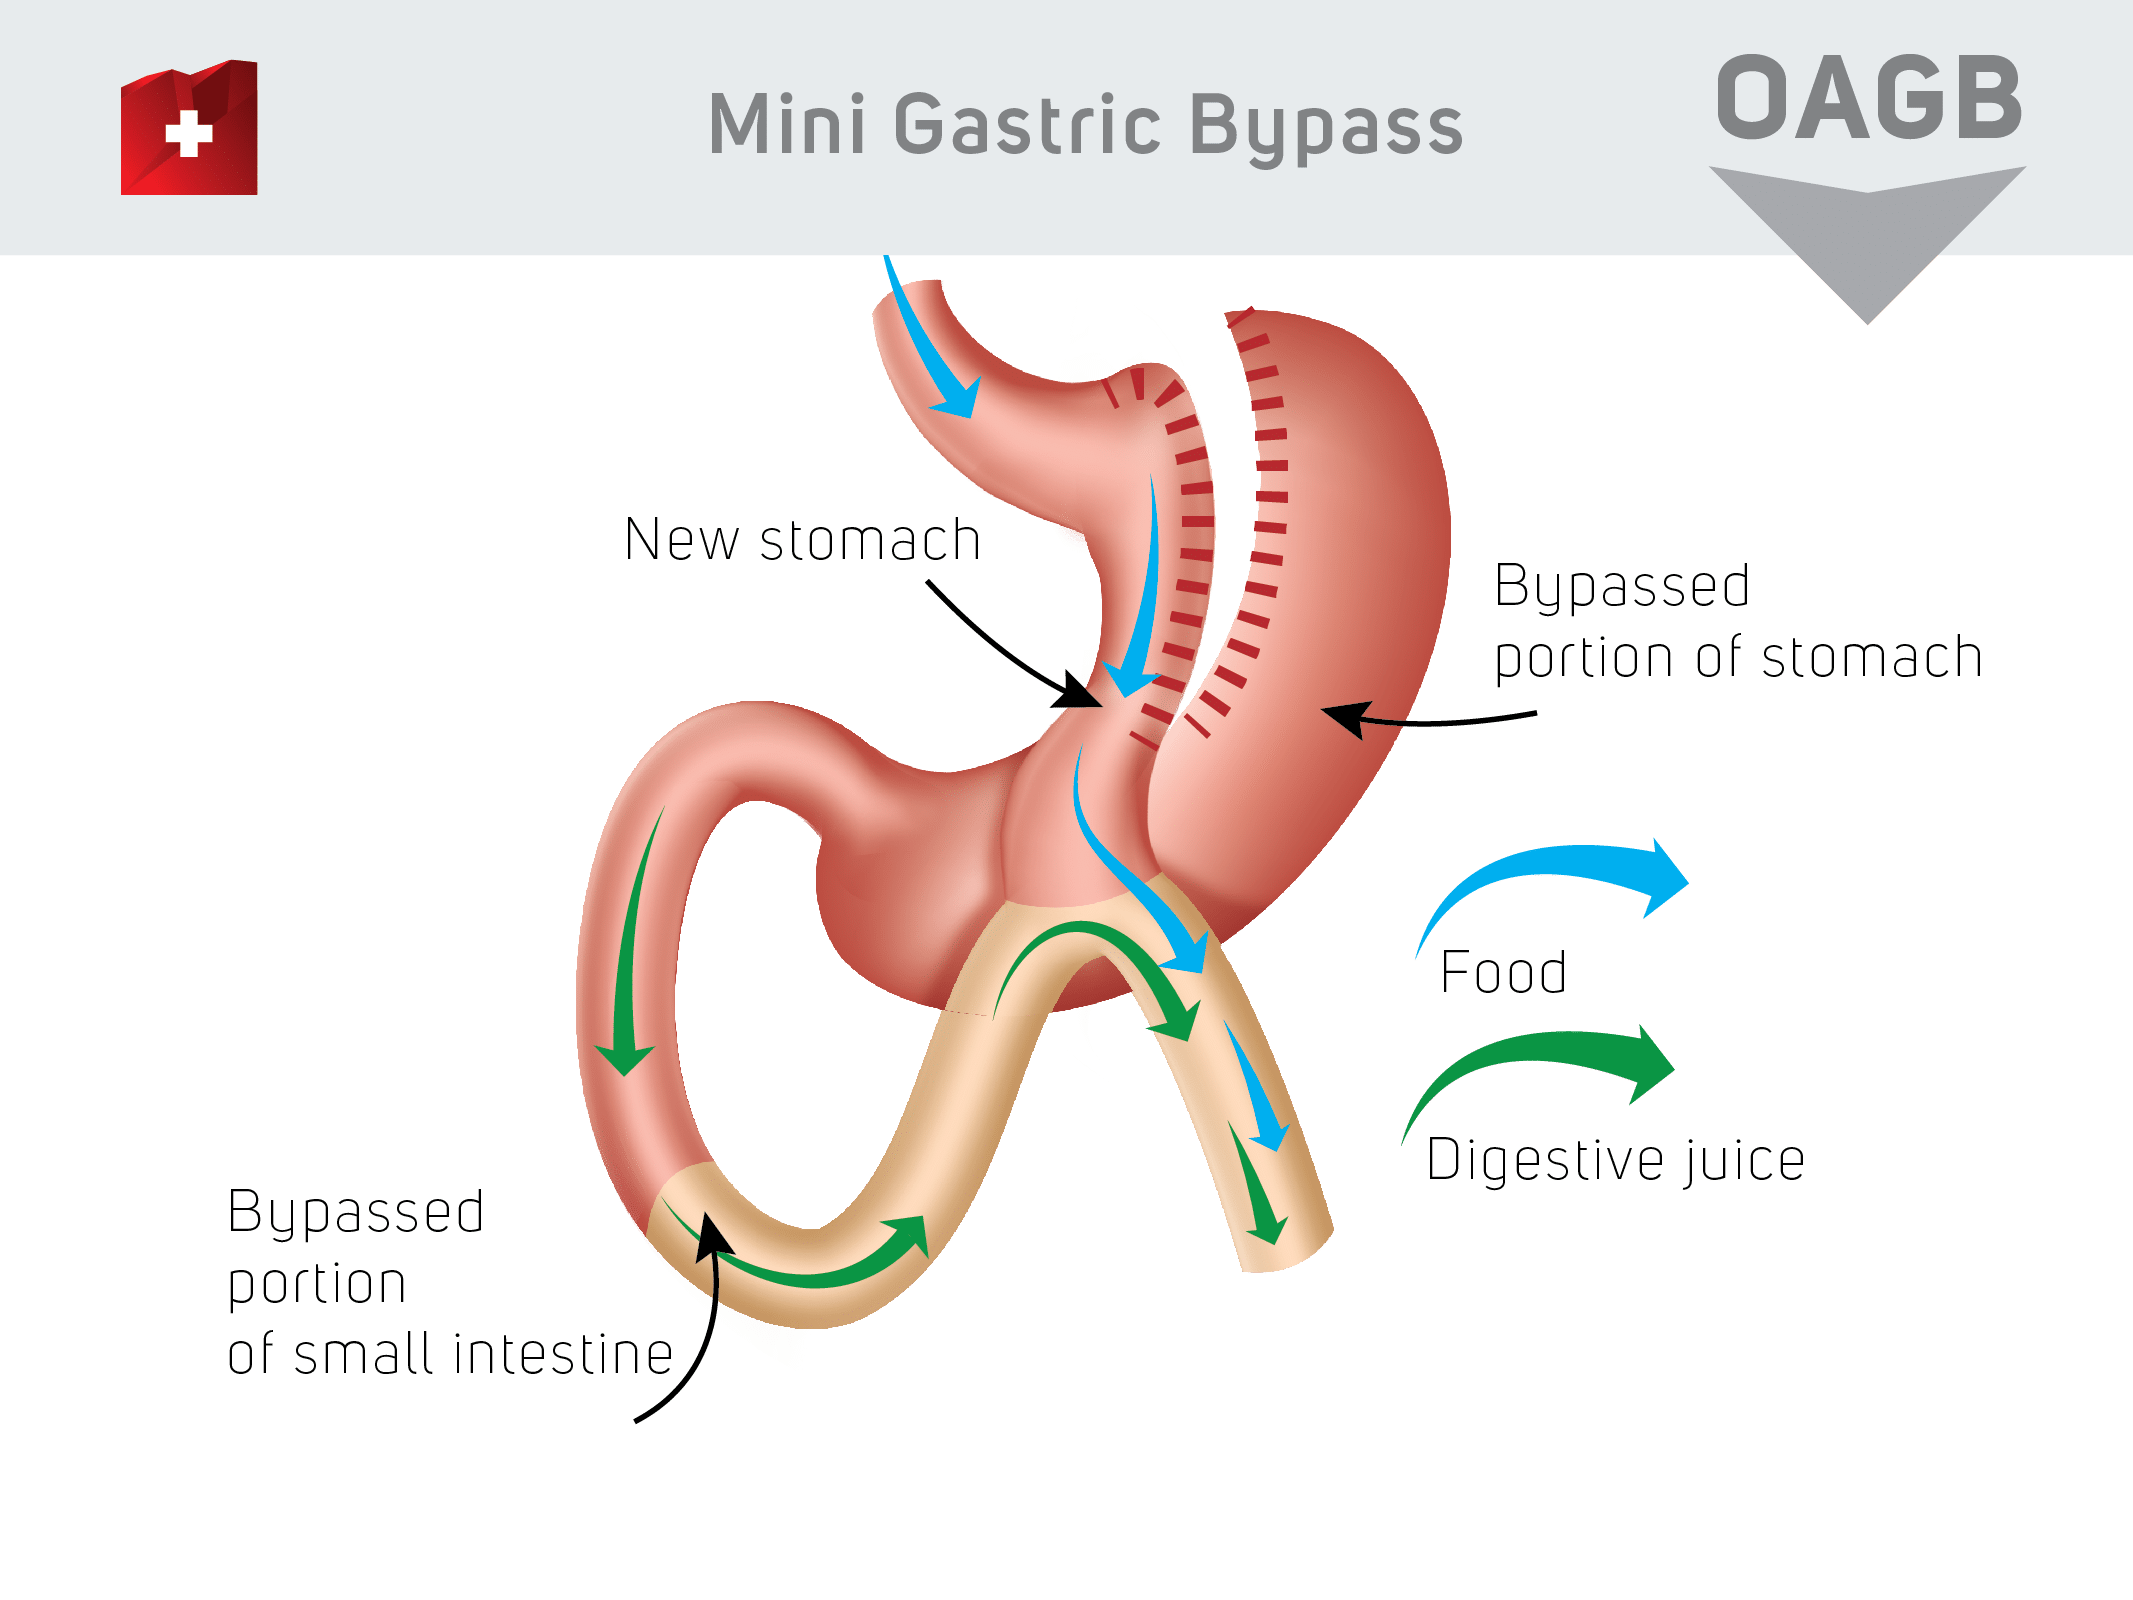 Dieta post bypass gastrico